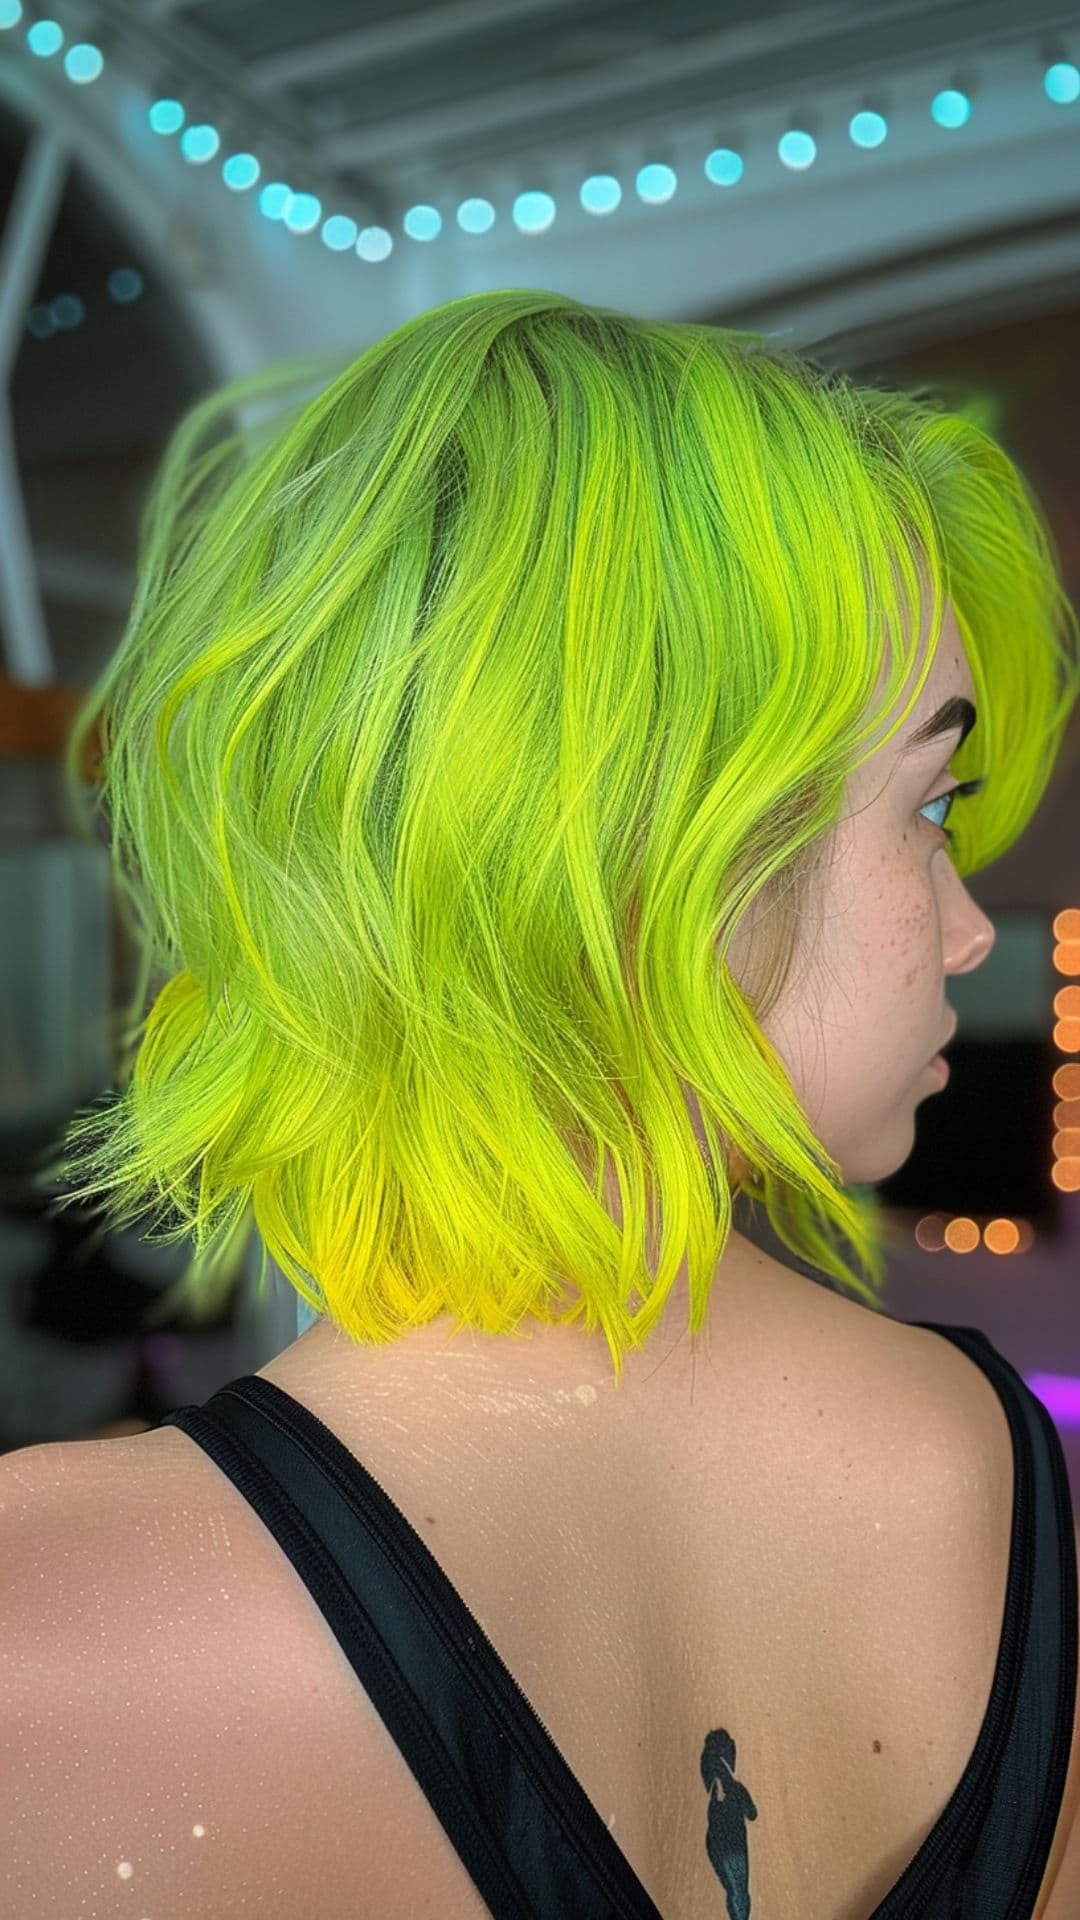 A woman modelling a fluorescent hair.